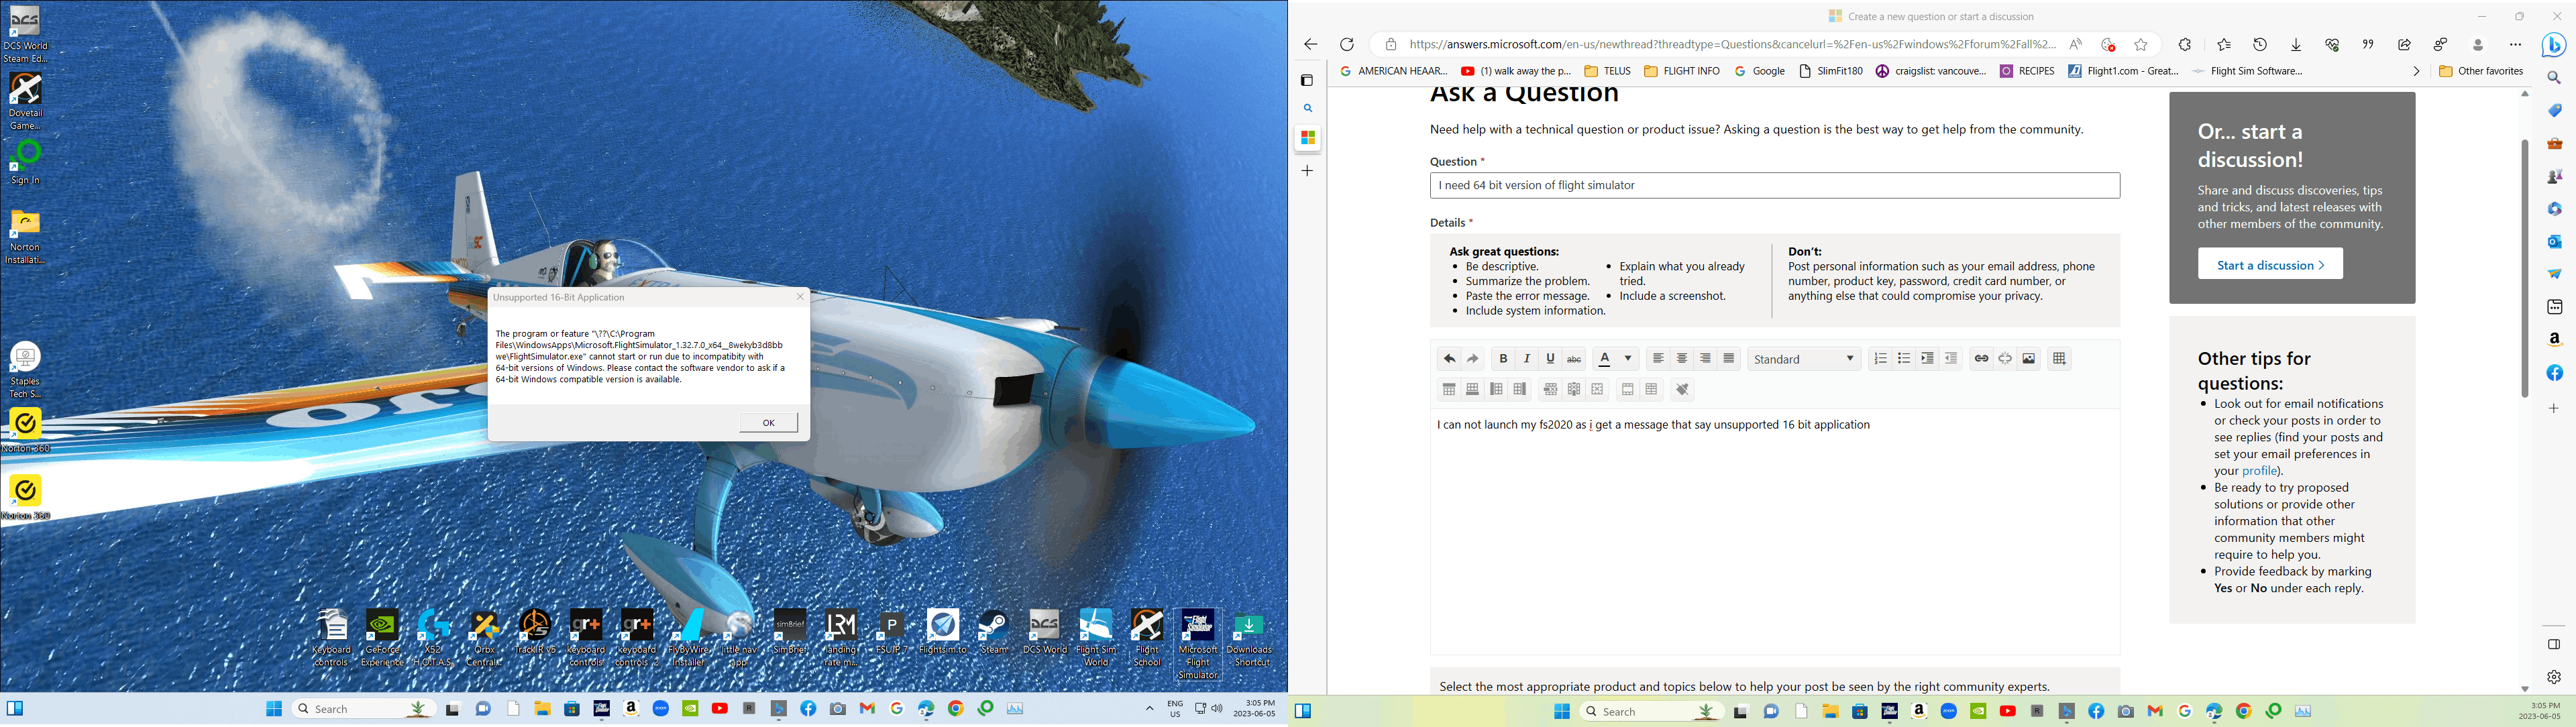 How to repair Microsoft Flight Simulator on Steam – Microsoft Flight  Simulator Support